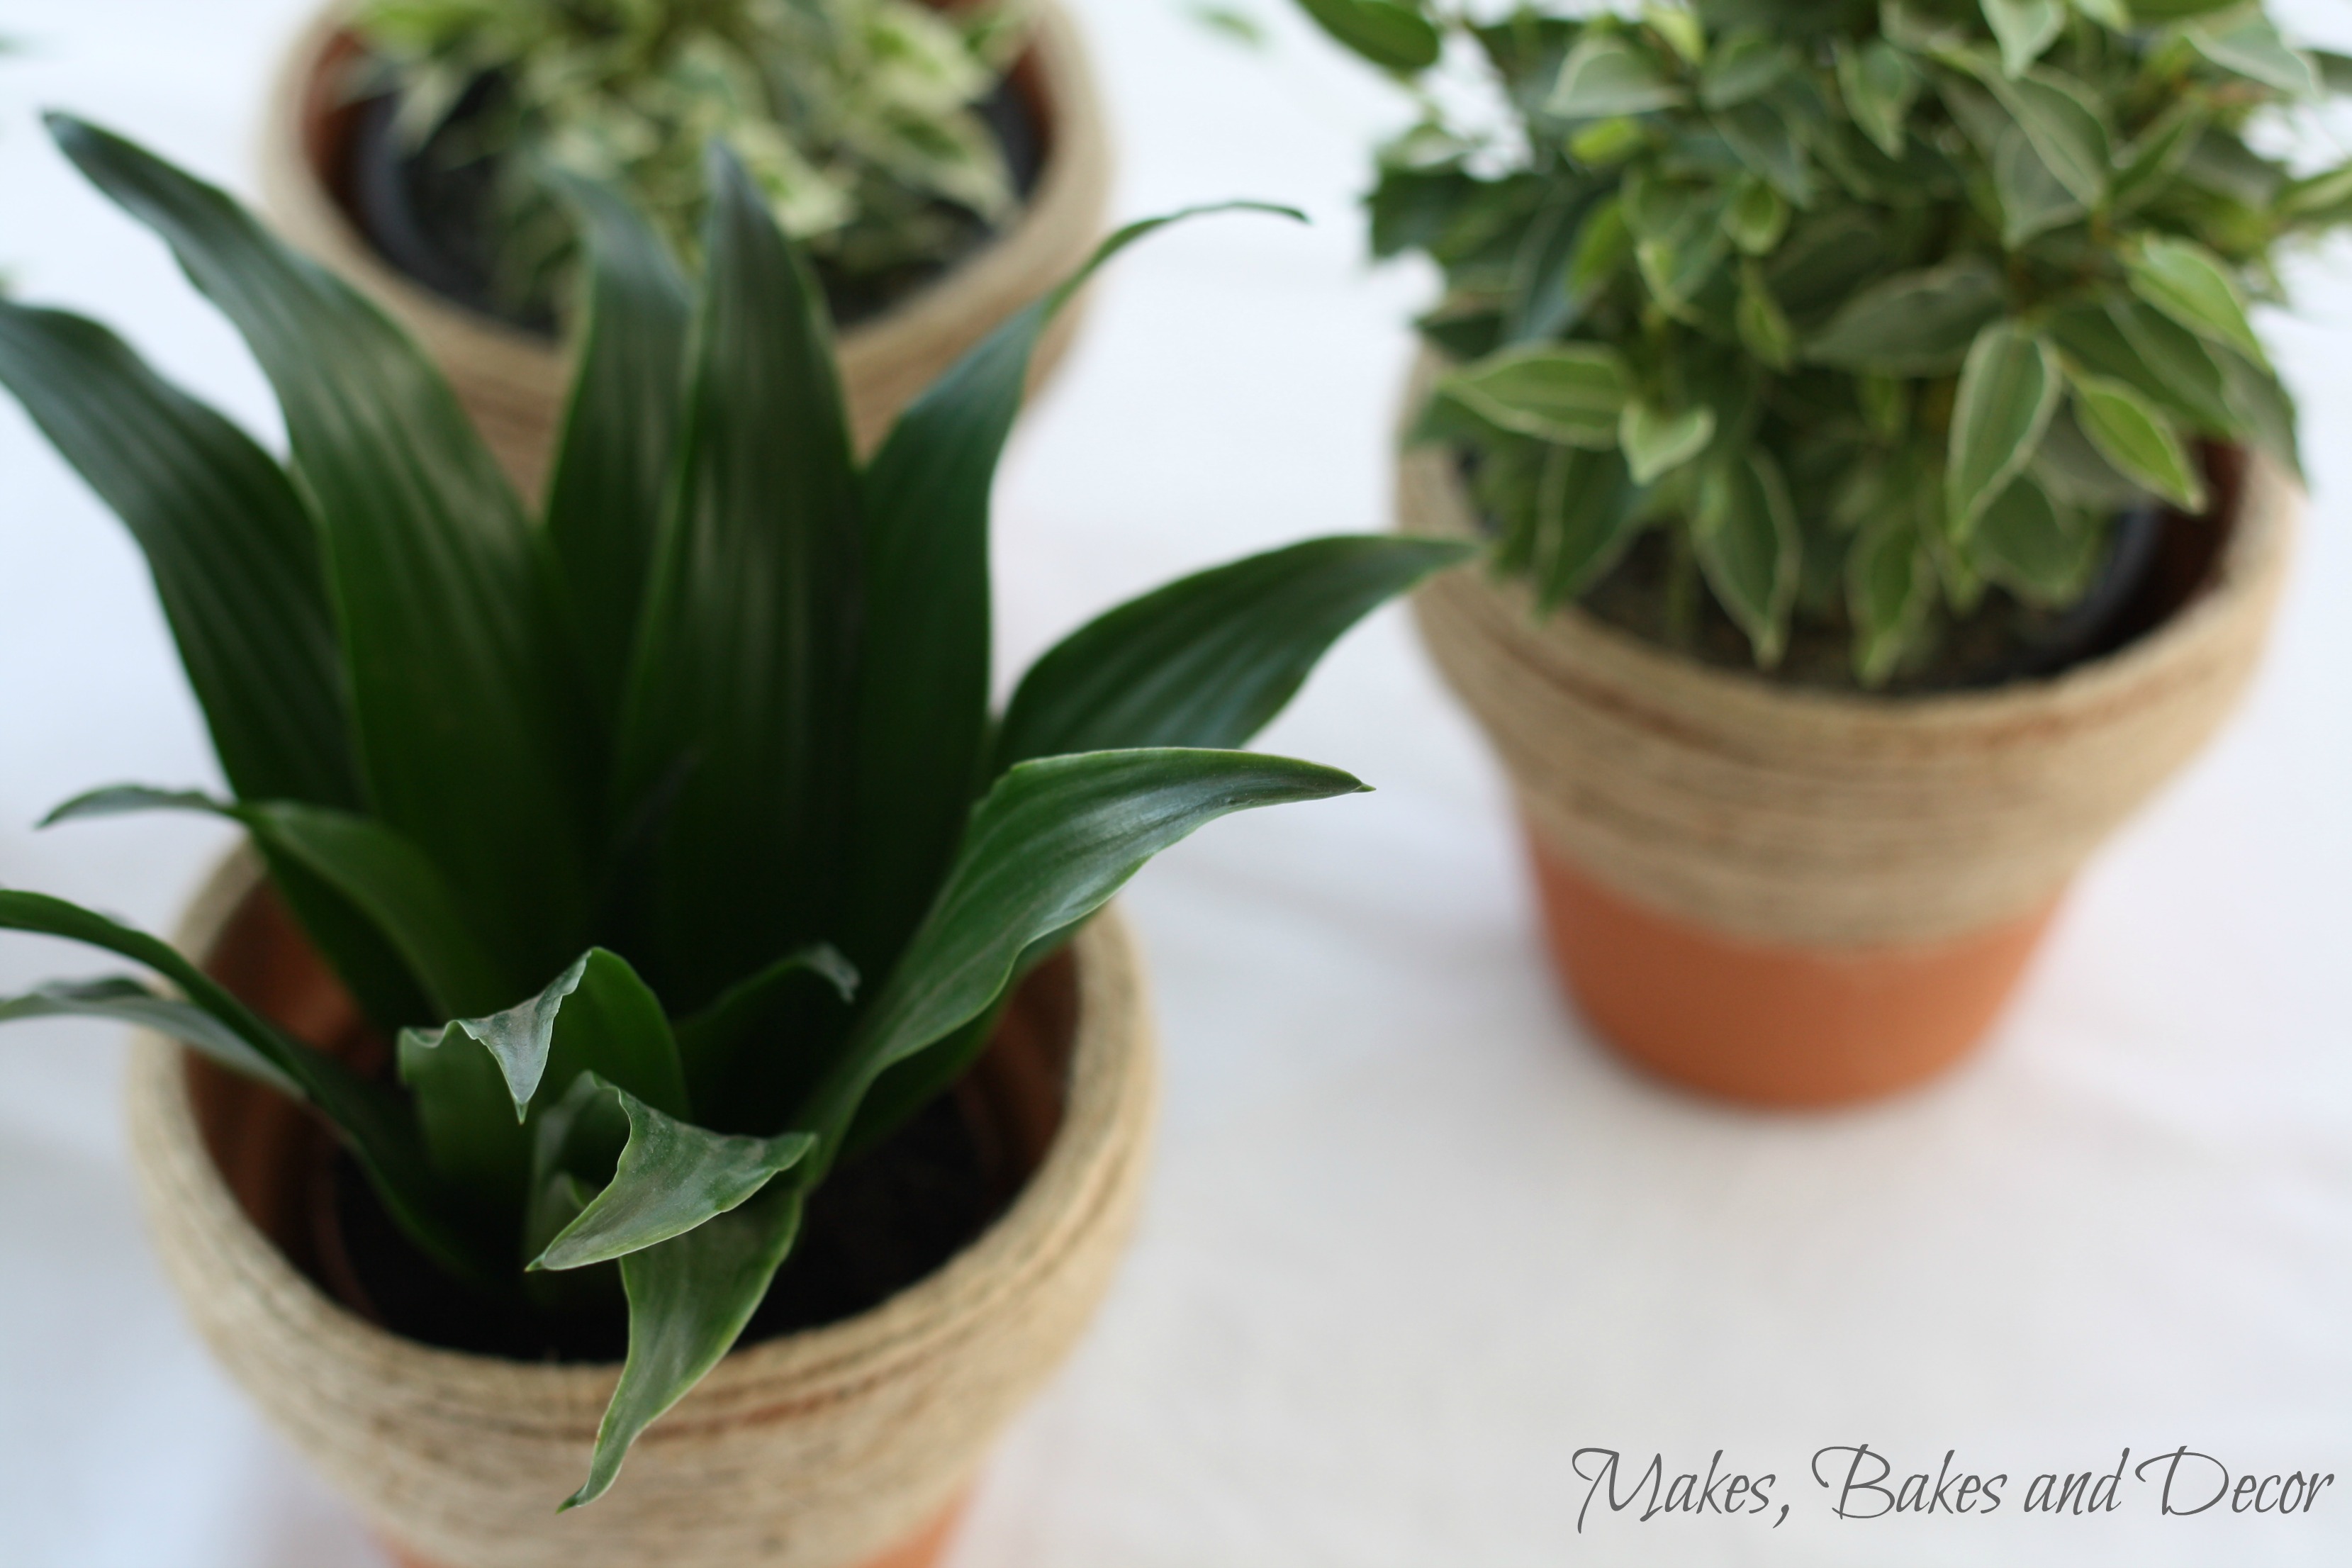 twine wrapped plant pots